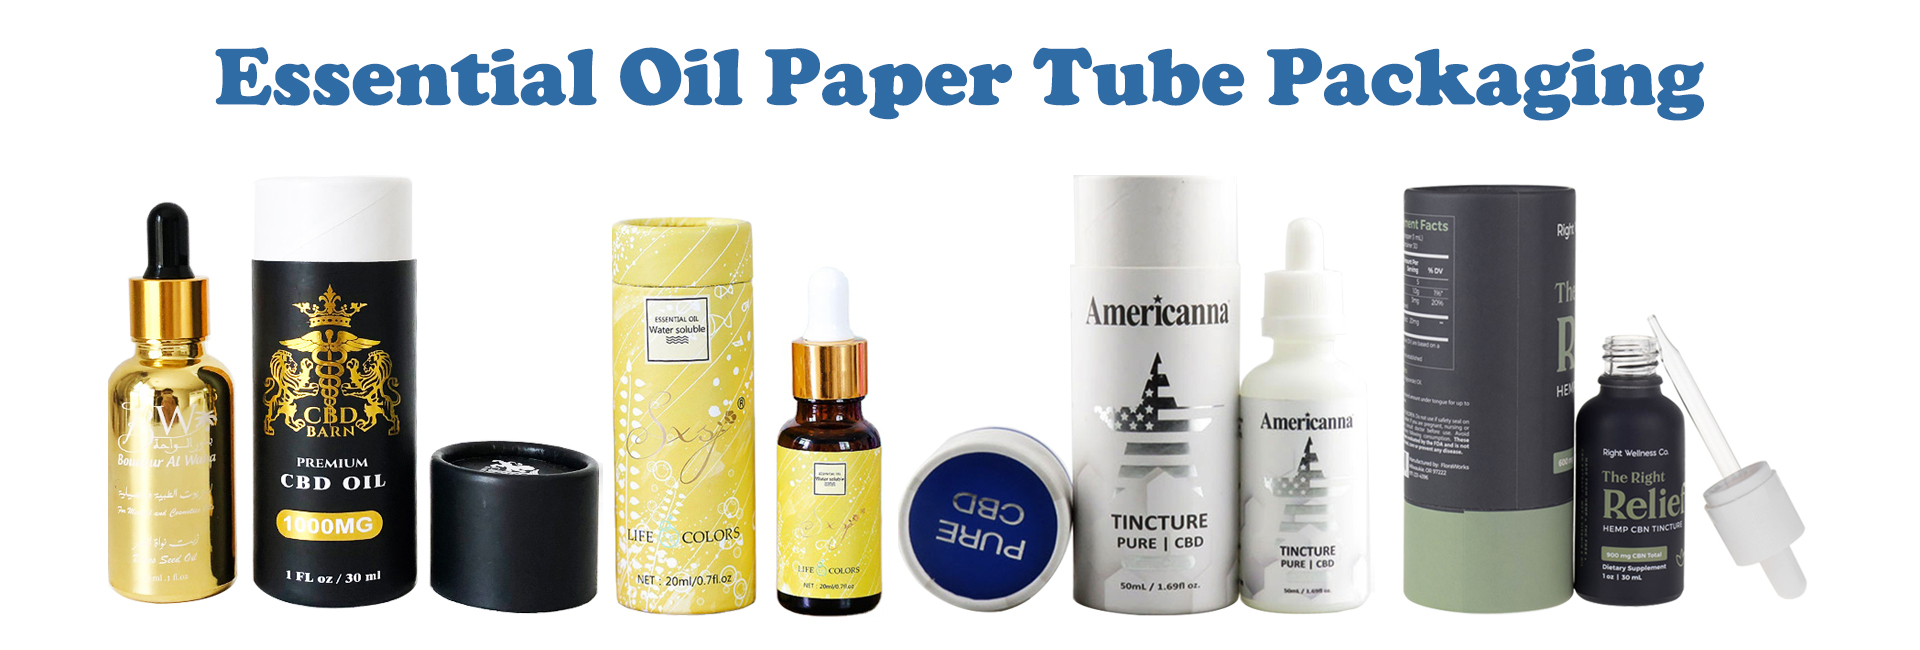 Essential Oil Paper Tube Packaging 